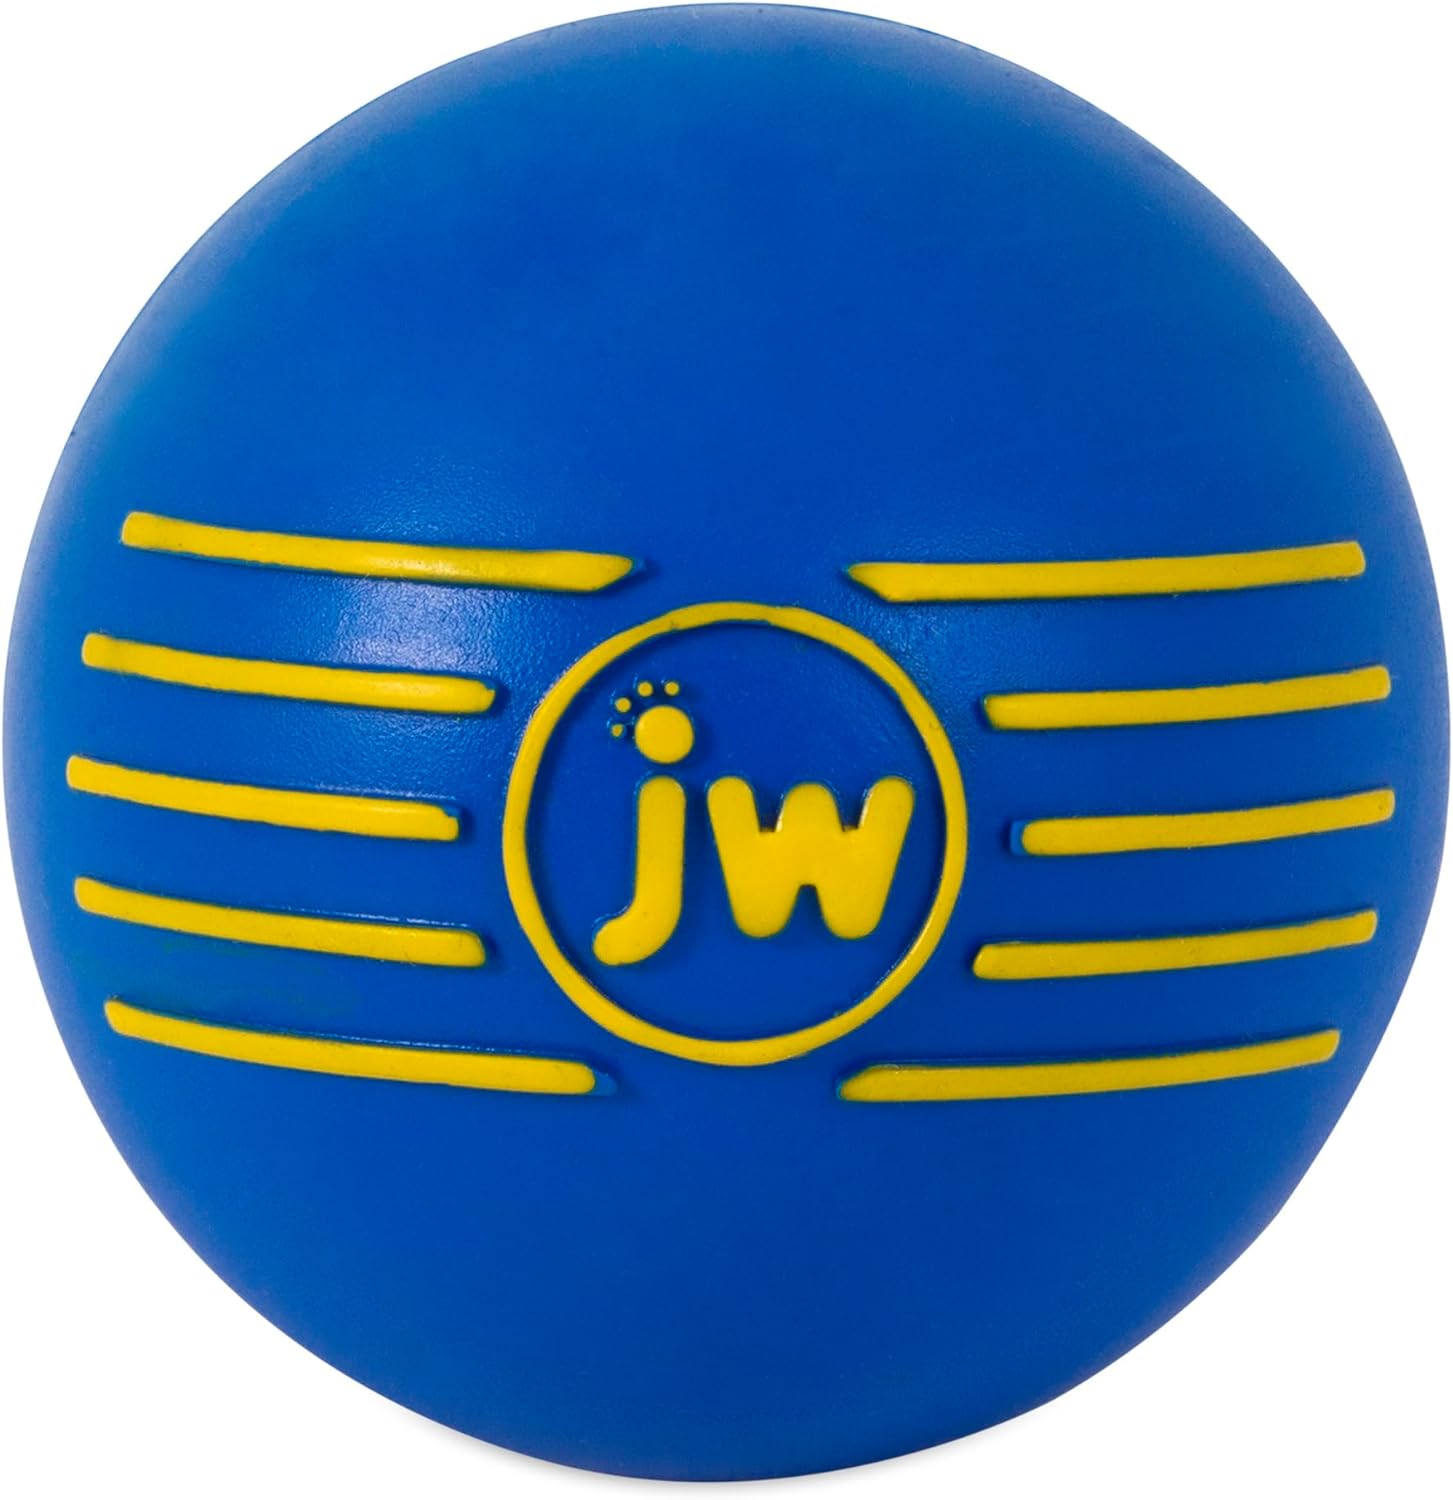 Jw Isqueak Ball Small